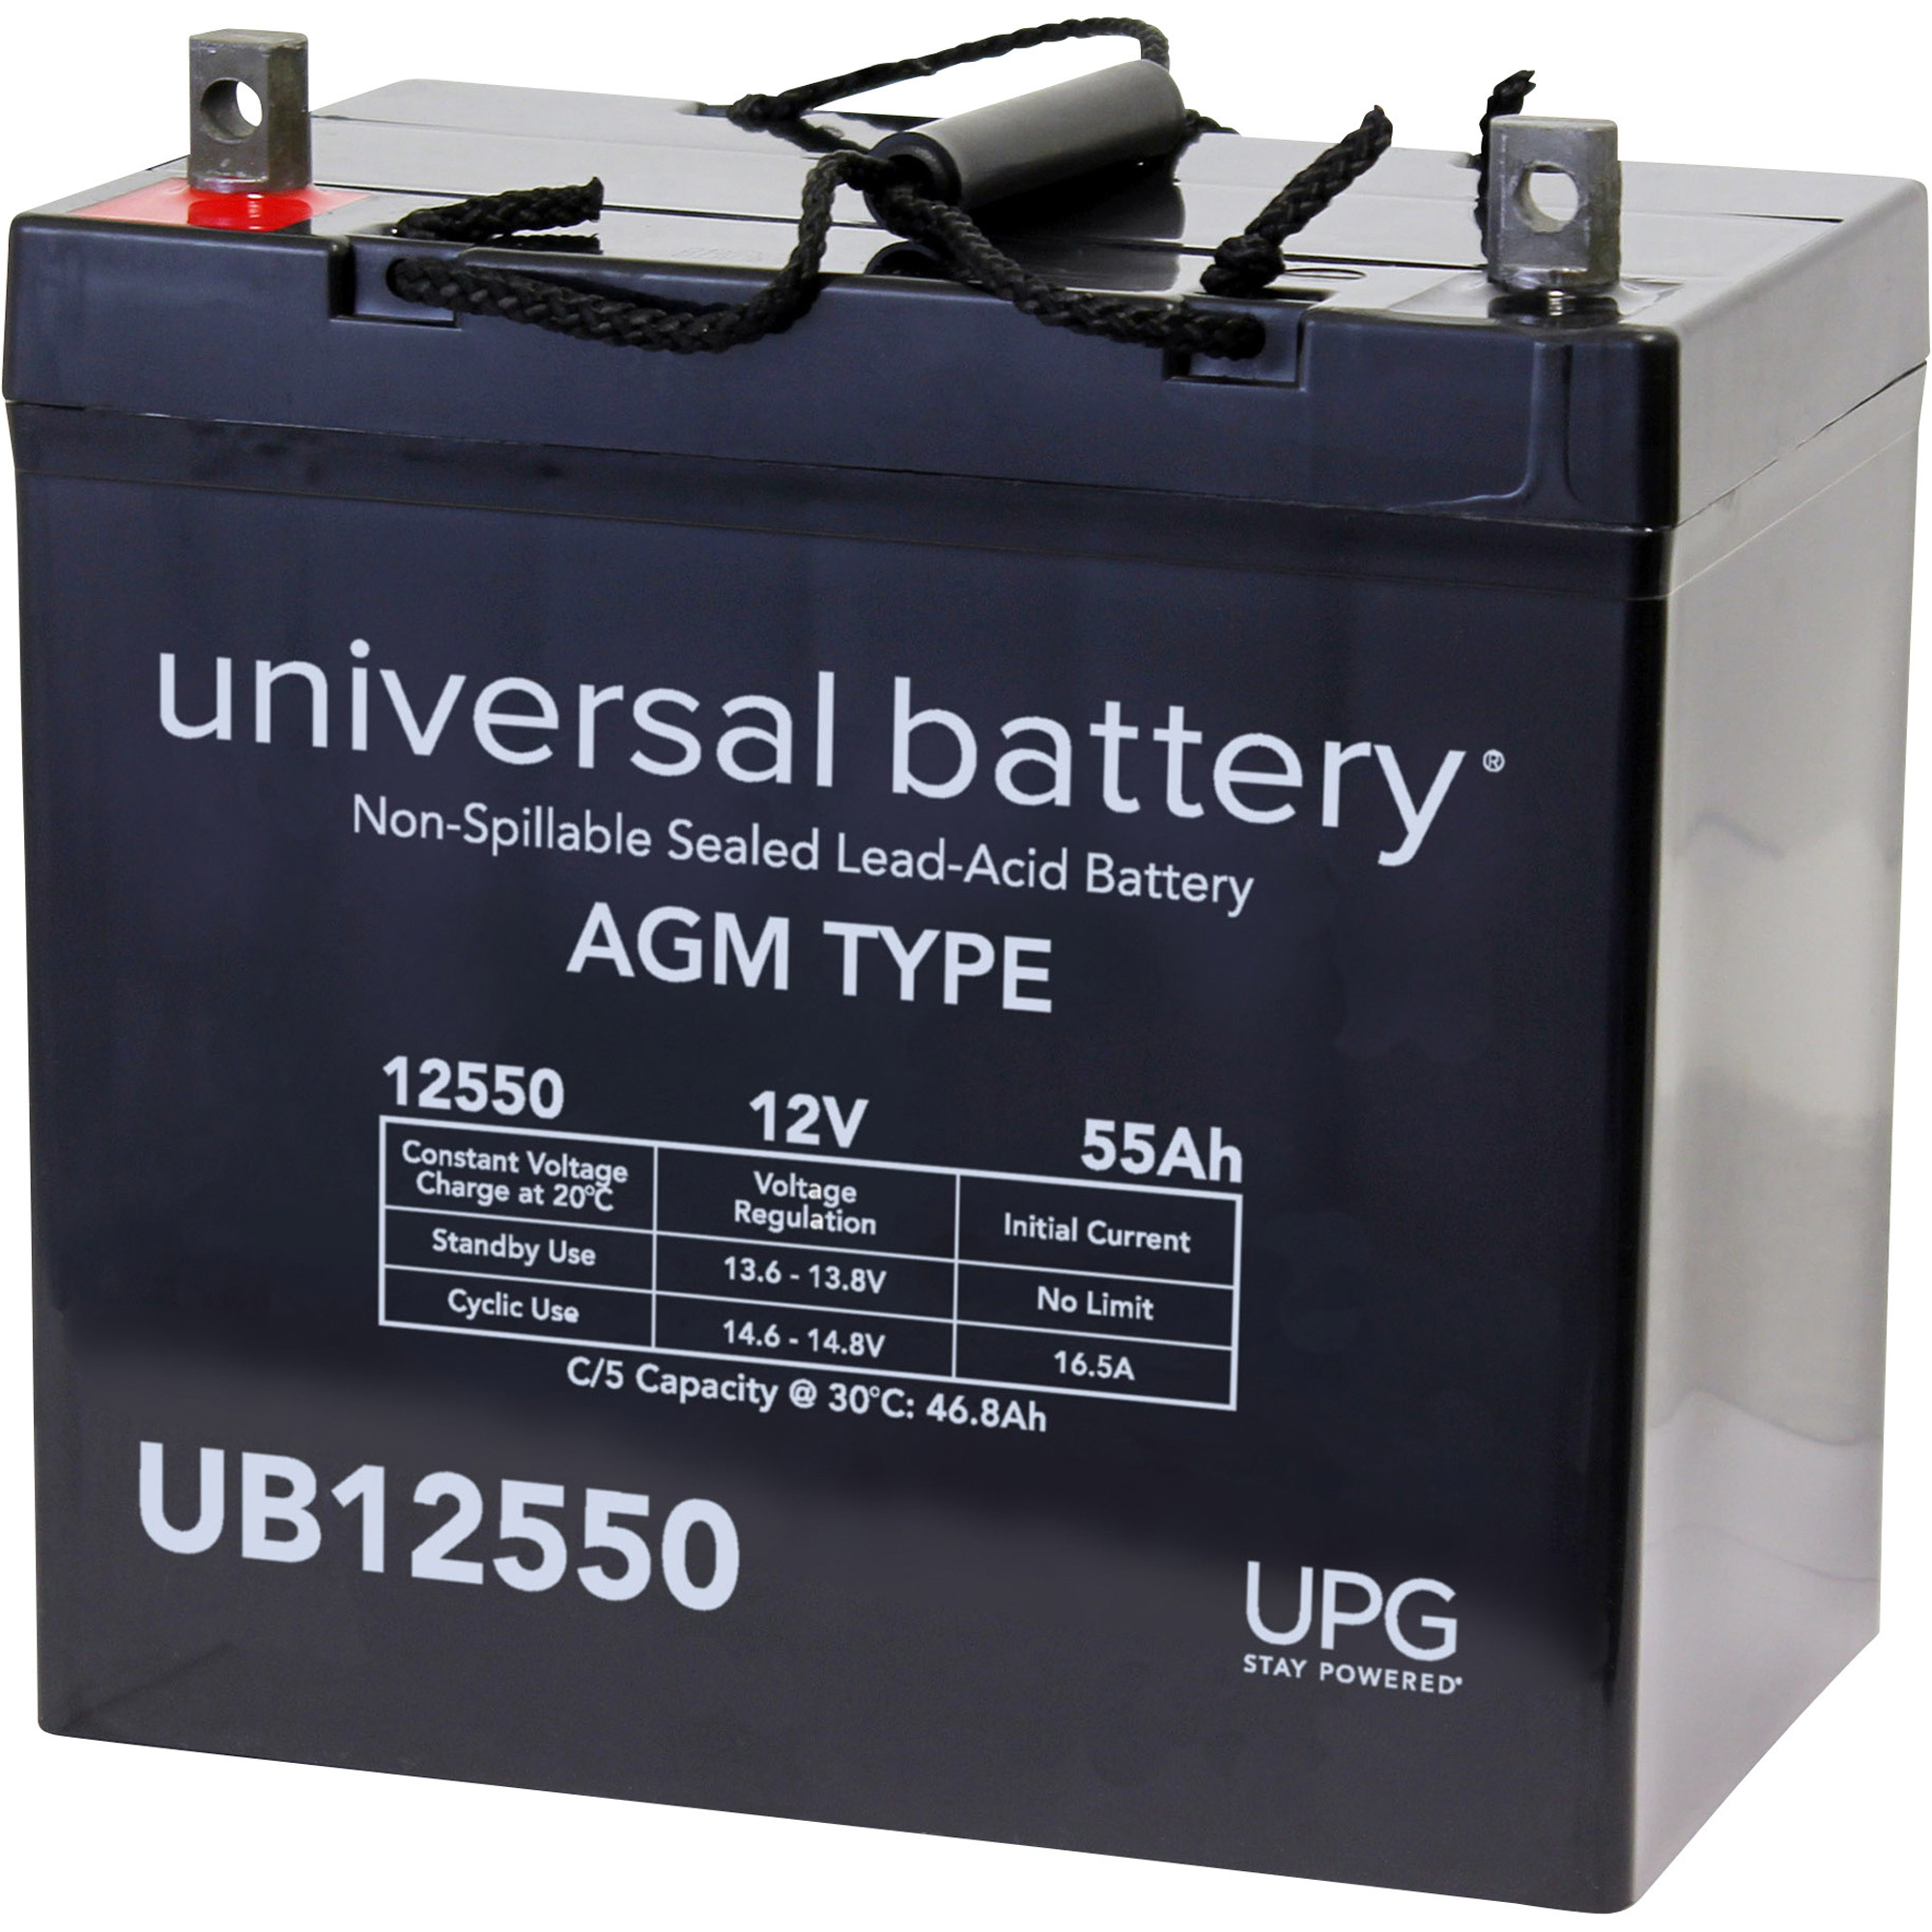 UPG Universal Sealed Lead-Acid Battery, AGM-type, 12V, 55 Amps, Group 22NF, Model UB12550